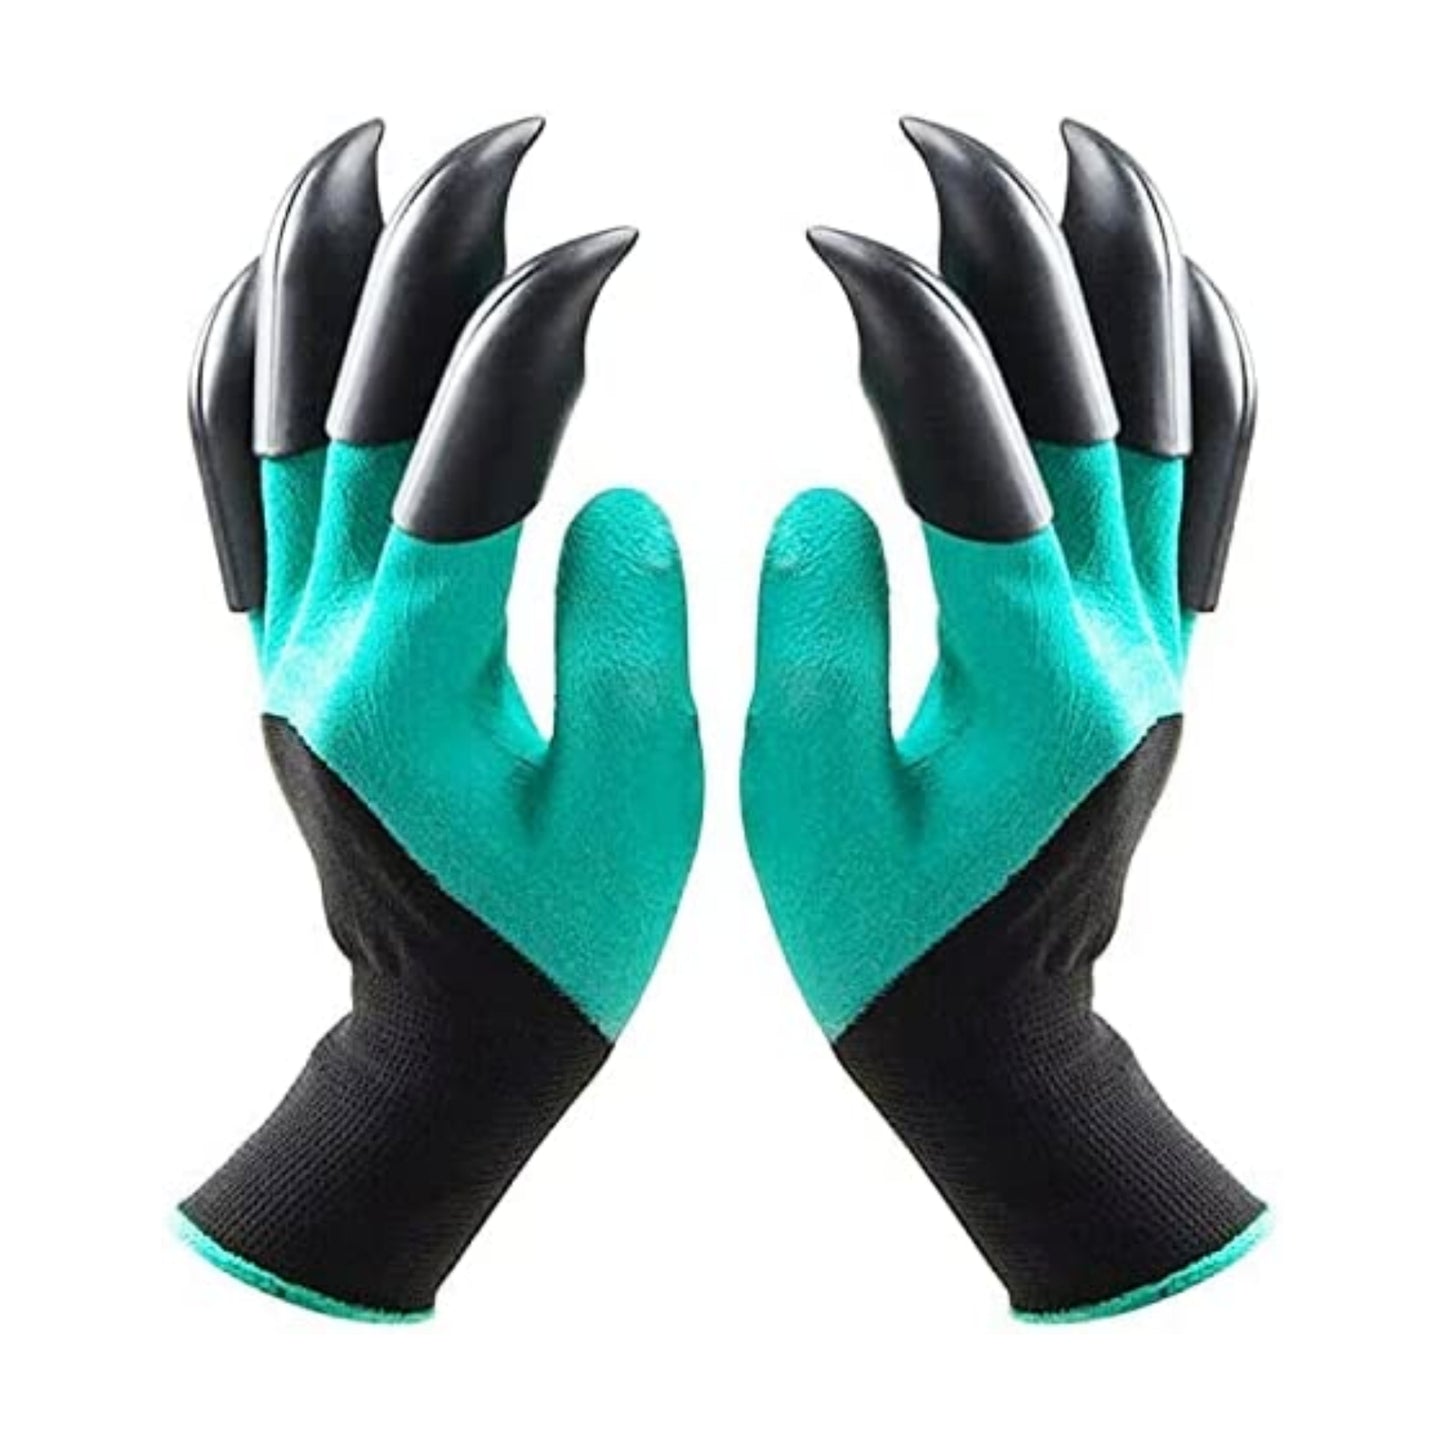 Garden Gloves with Claws - Homeware Discounts